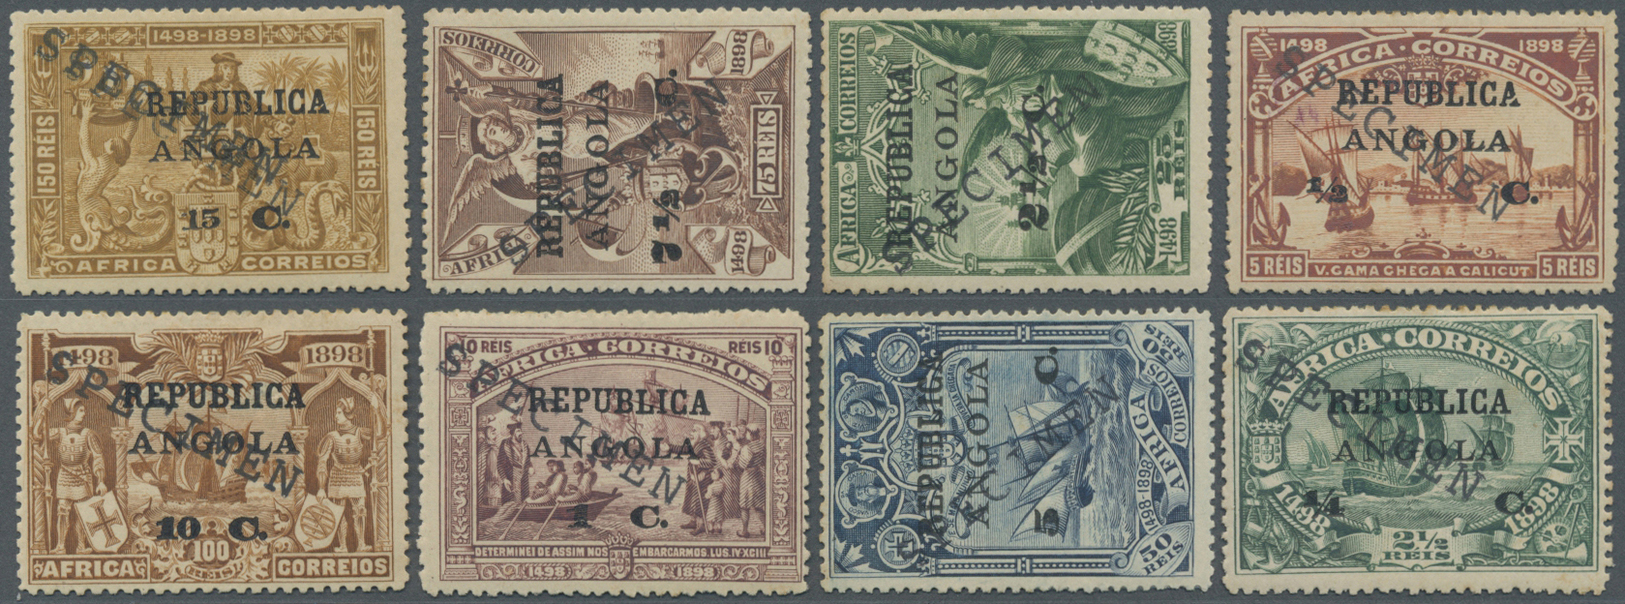 * Angola: 1898. Vasco De Gama Mint Set Of Eight Overprinted For 'Republica Angola' Set Of Eight 'Specimen’. Very Rare. - Angola